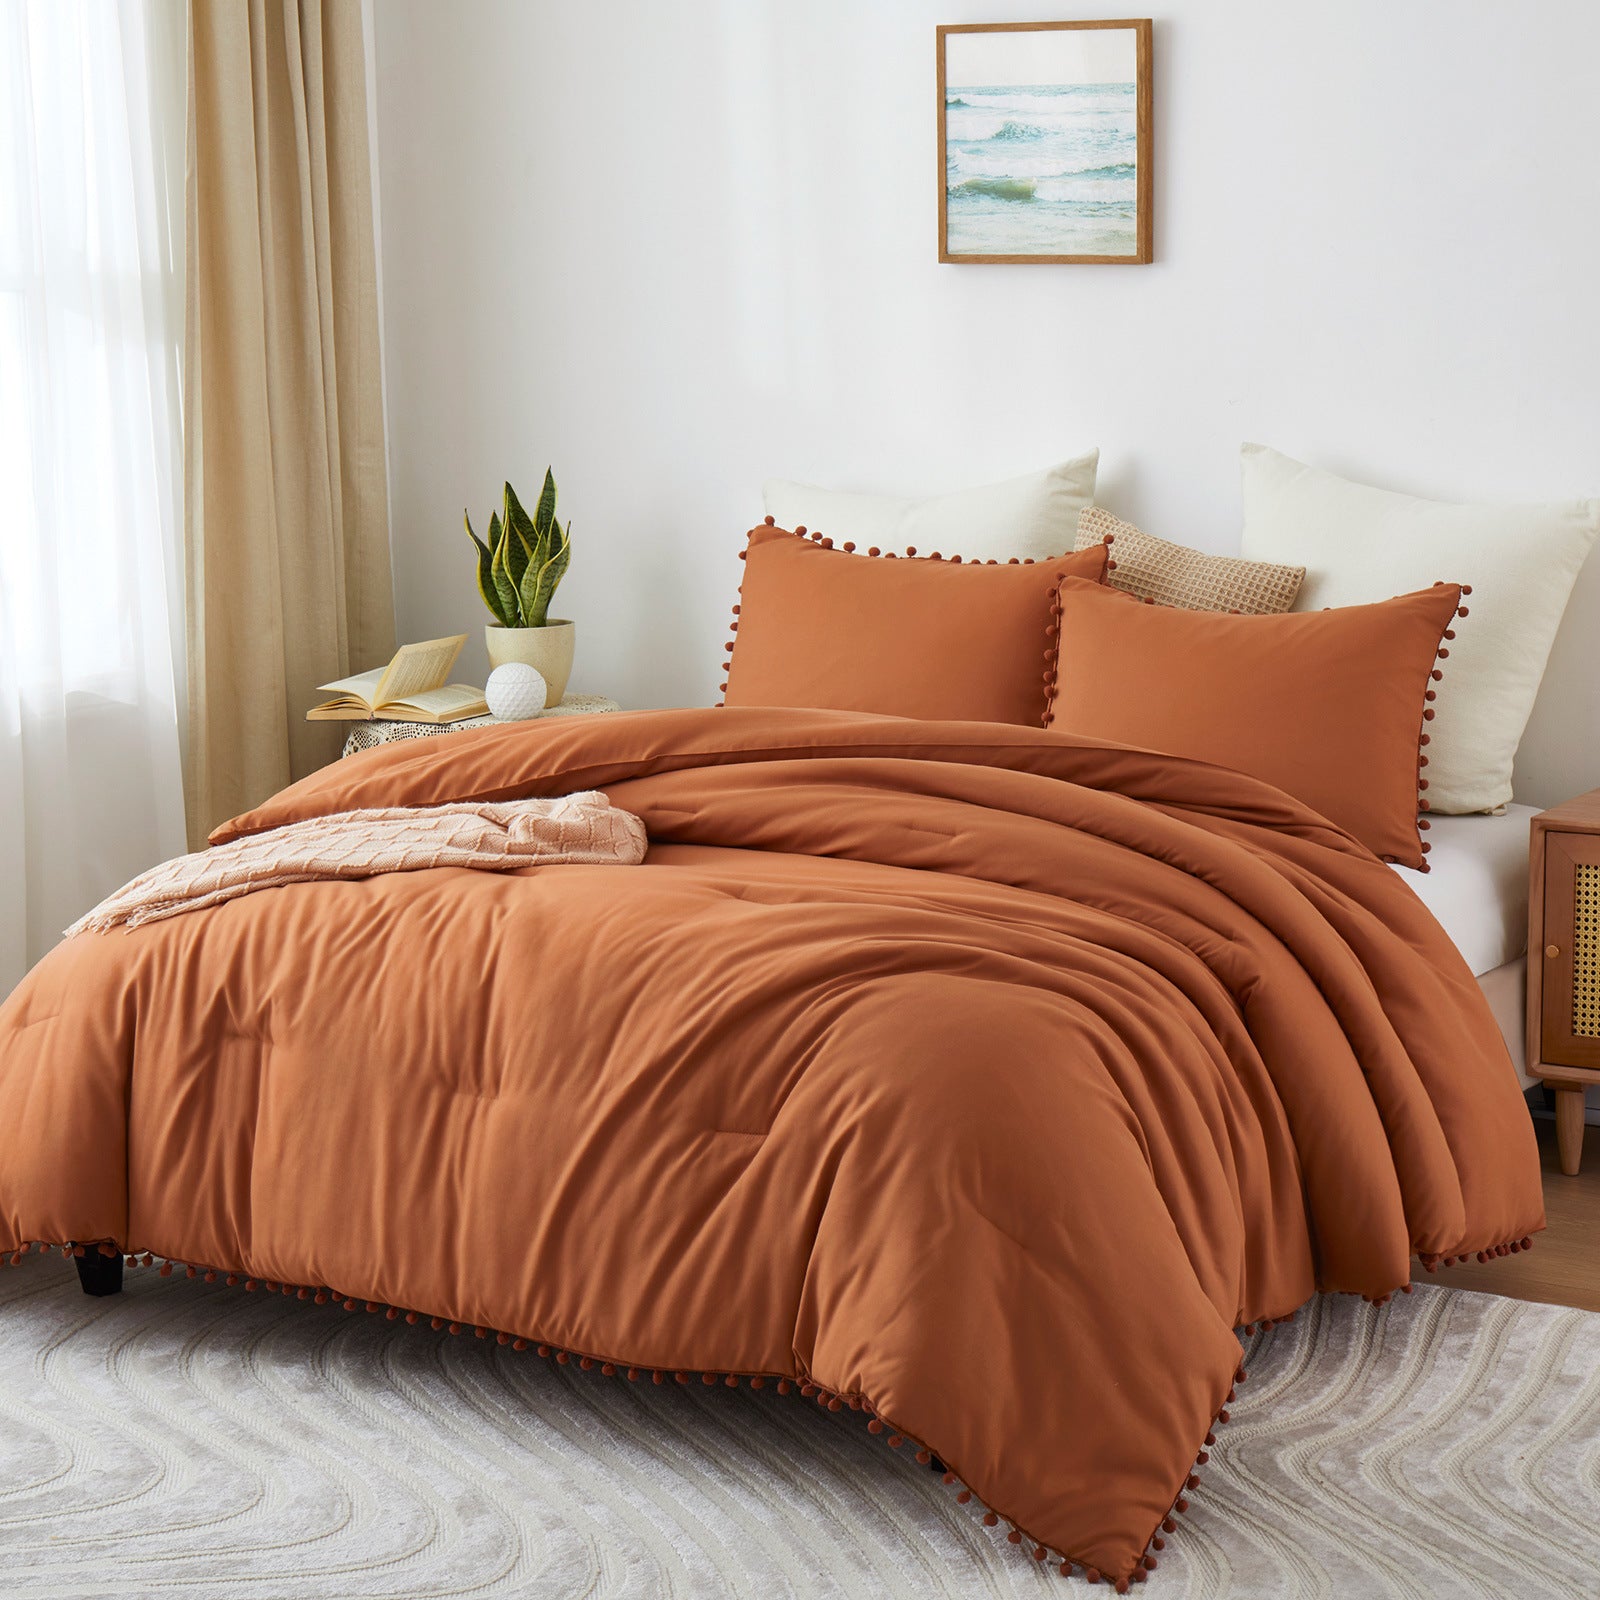 Boho Comforter Set with Pom Poms Fringe Design 3 Pieces